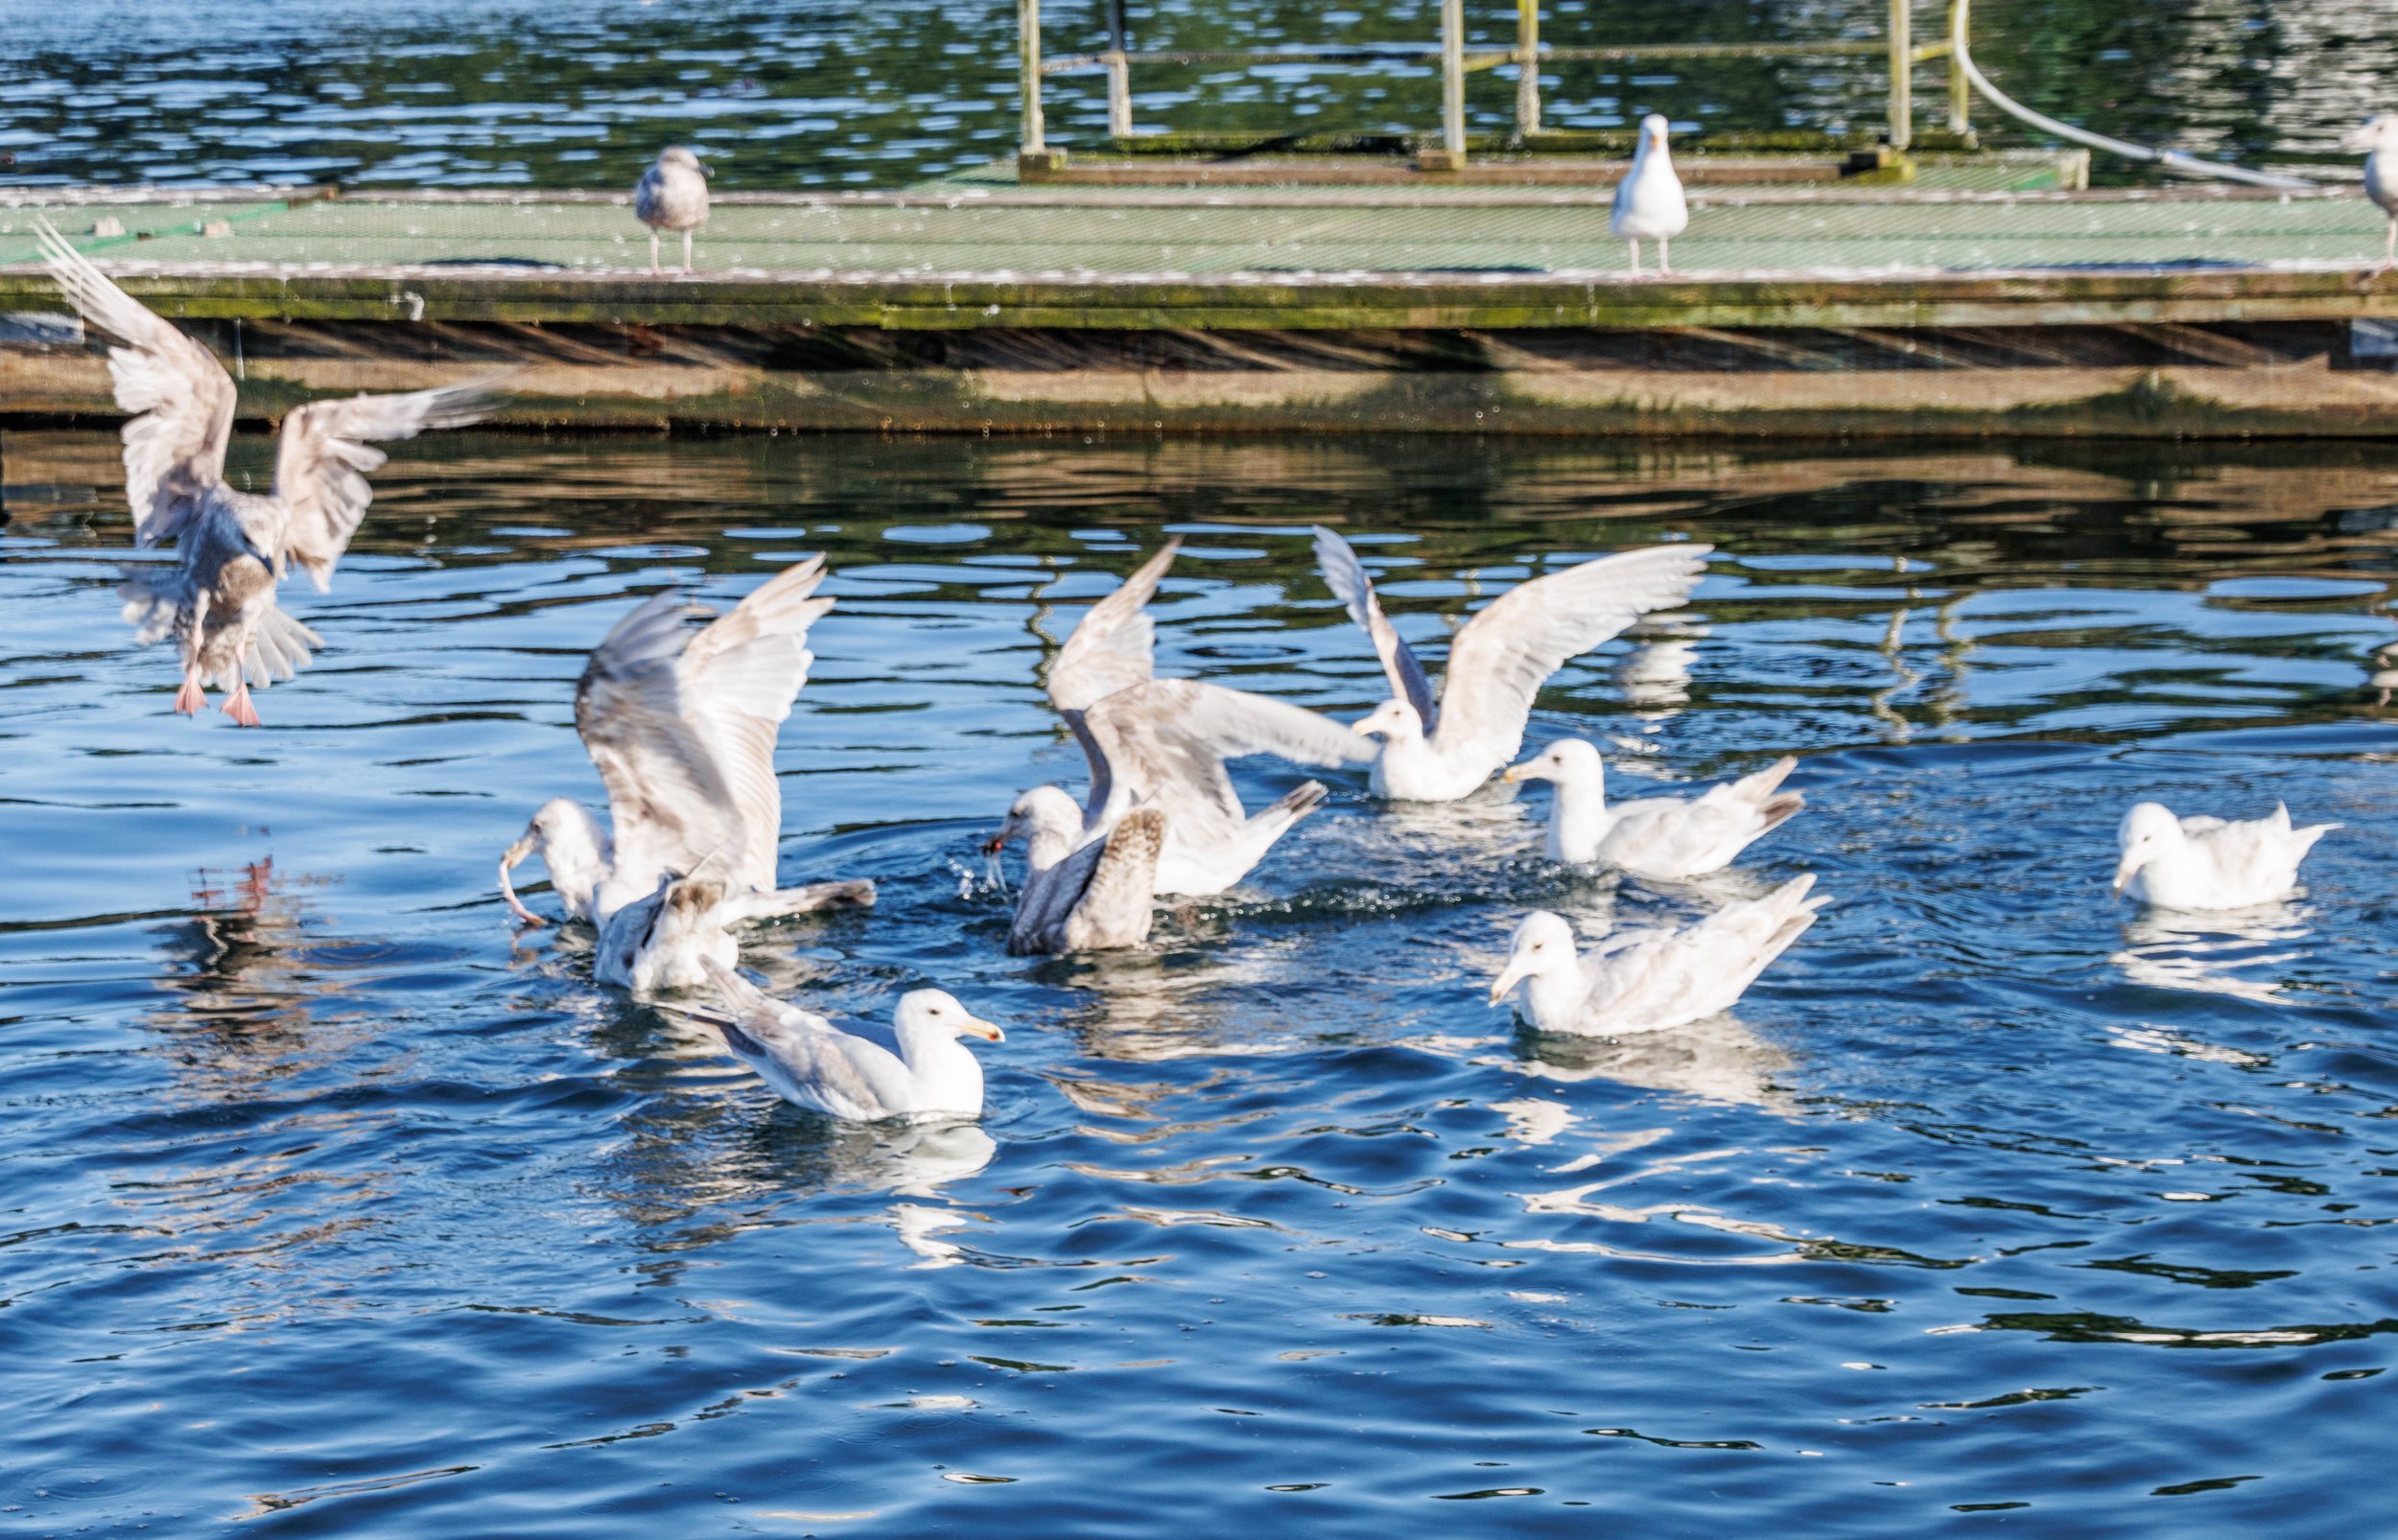 Birds in the water.jpg